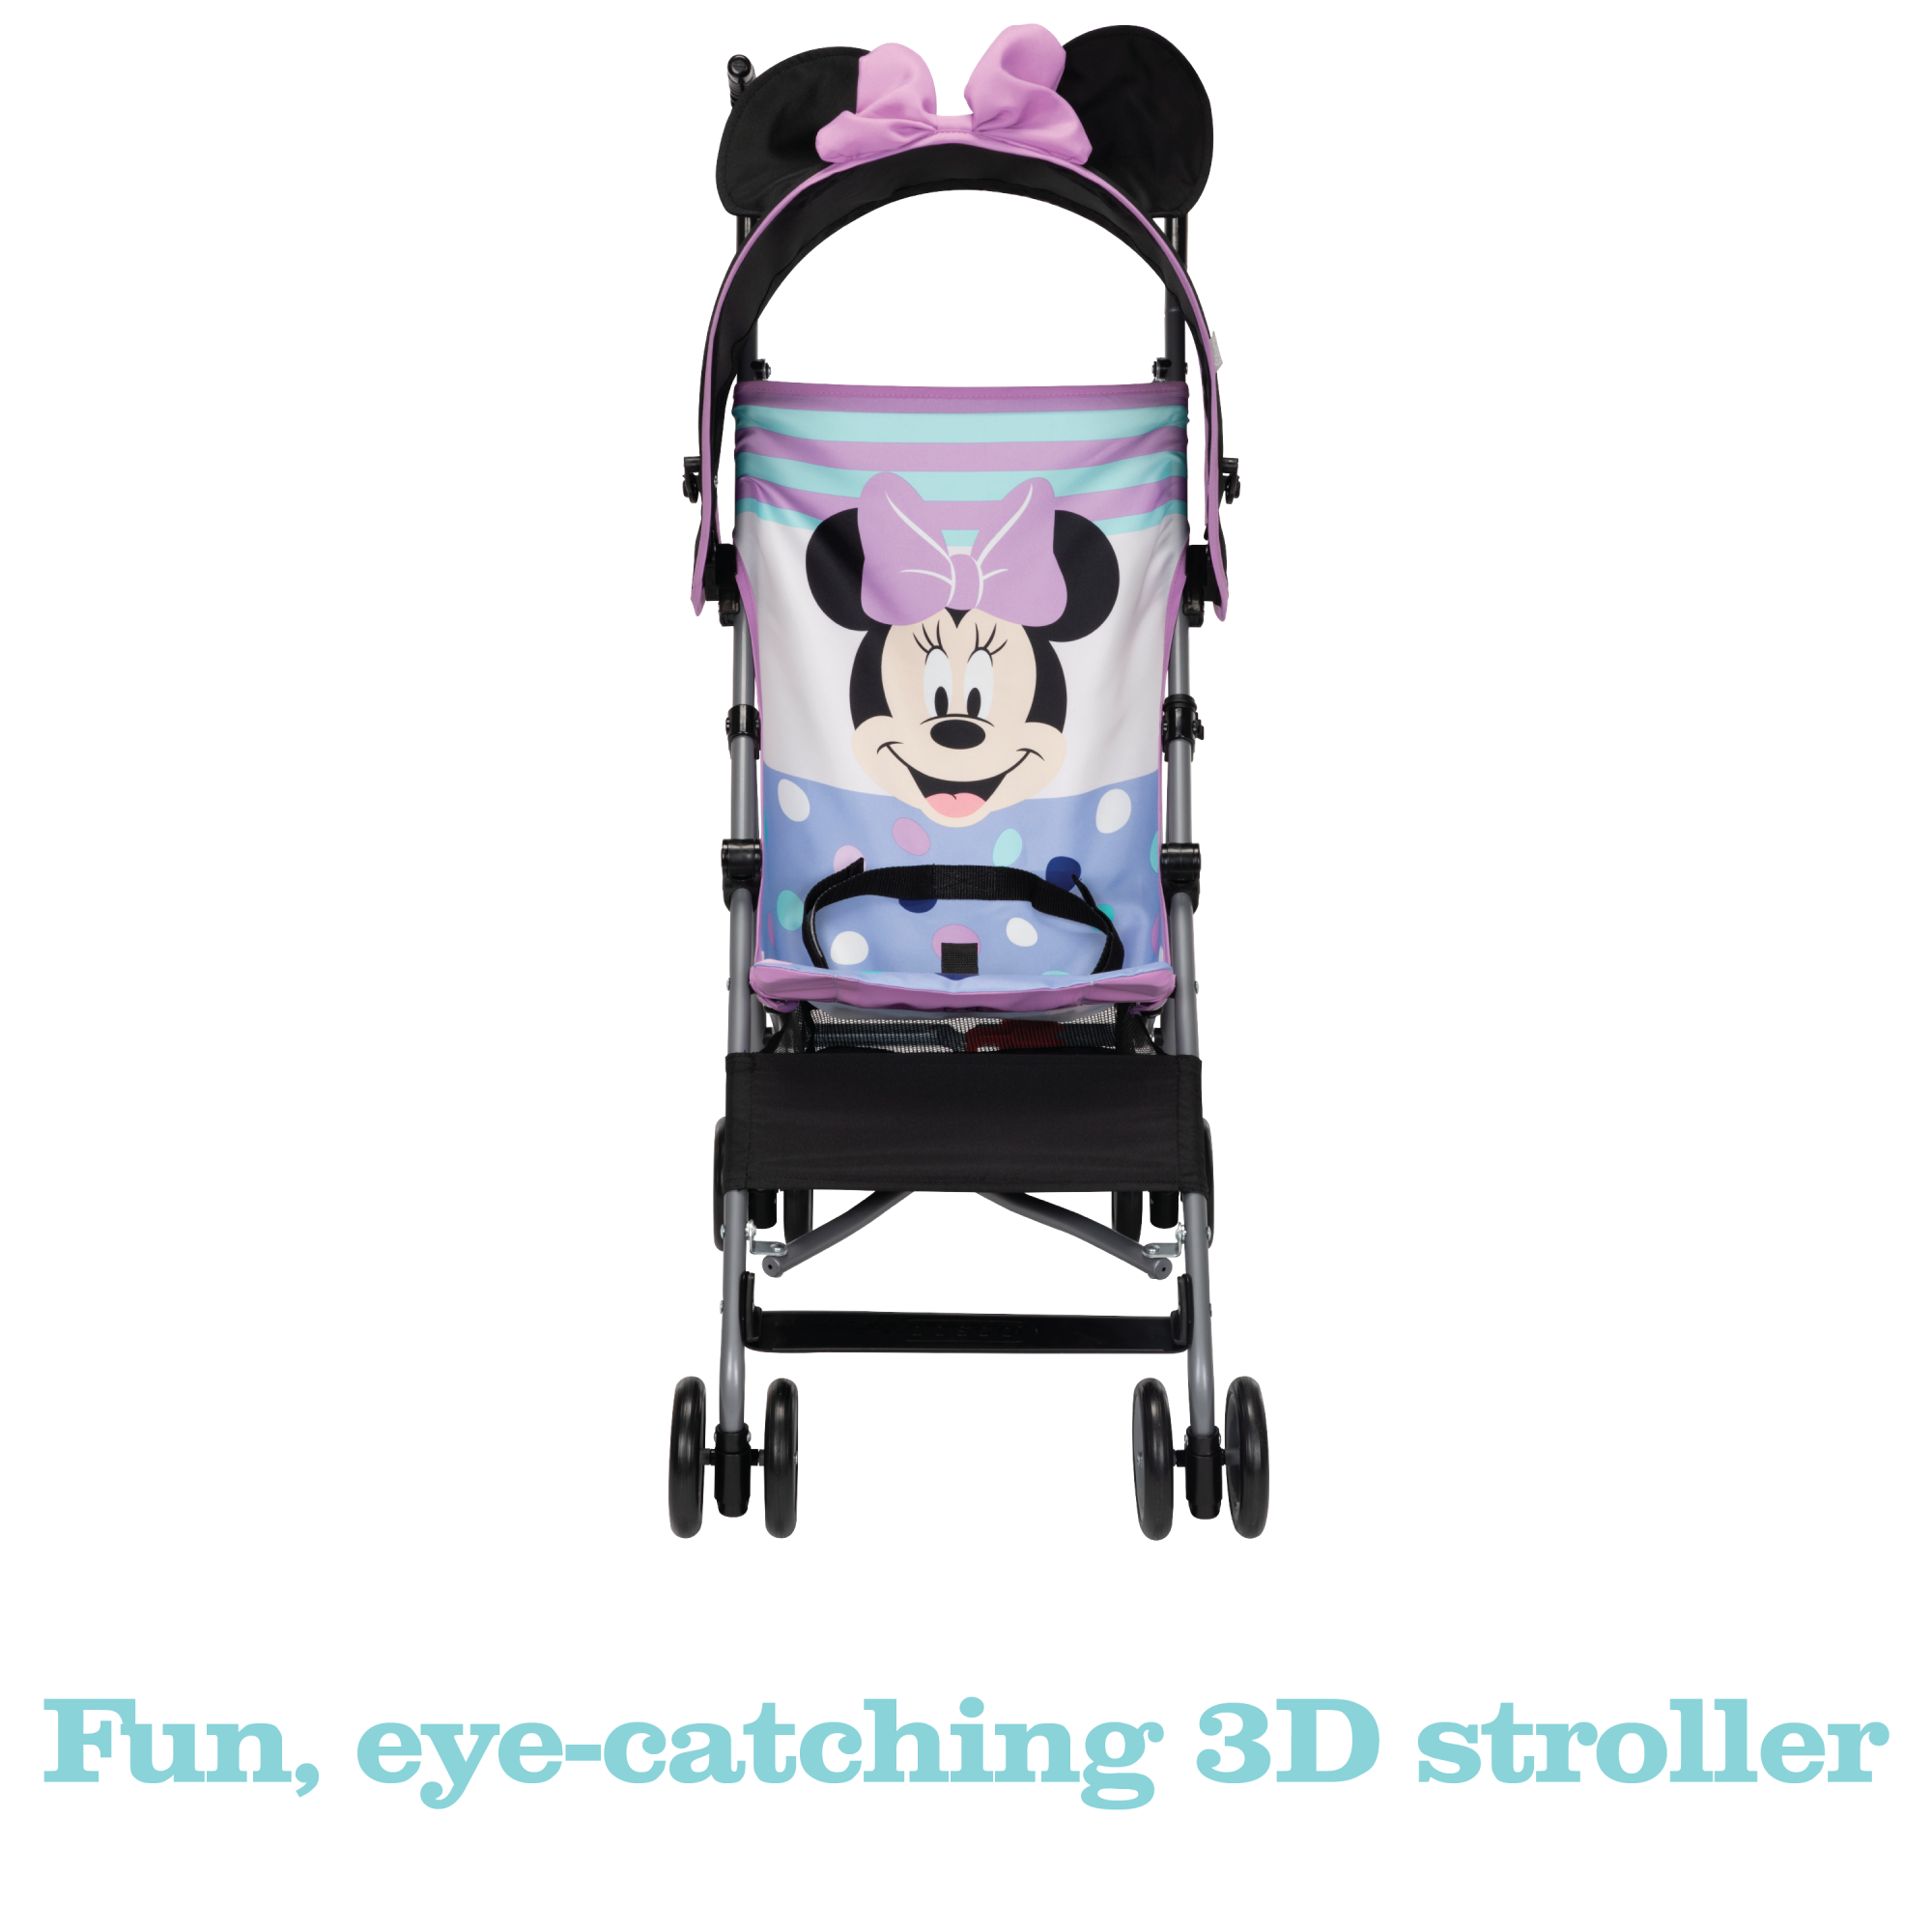 Disney Baby Character Umbrella Stroller - fun, eye-catching 3D stroller